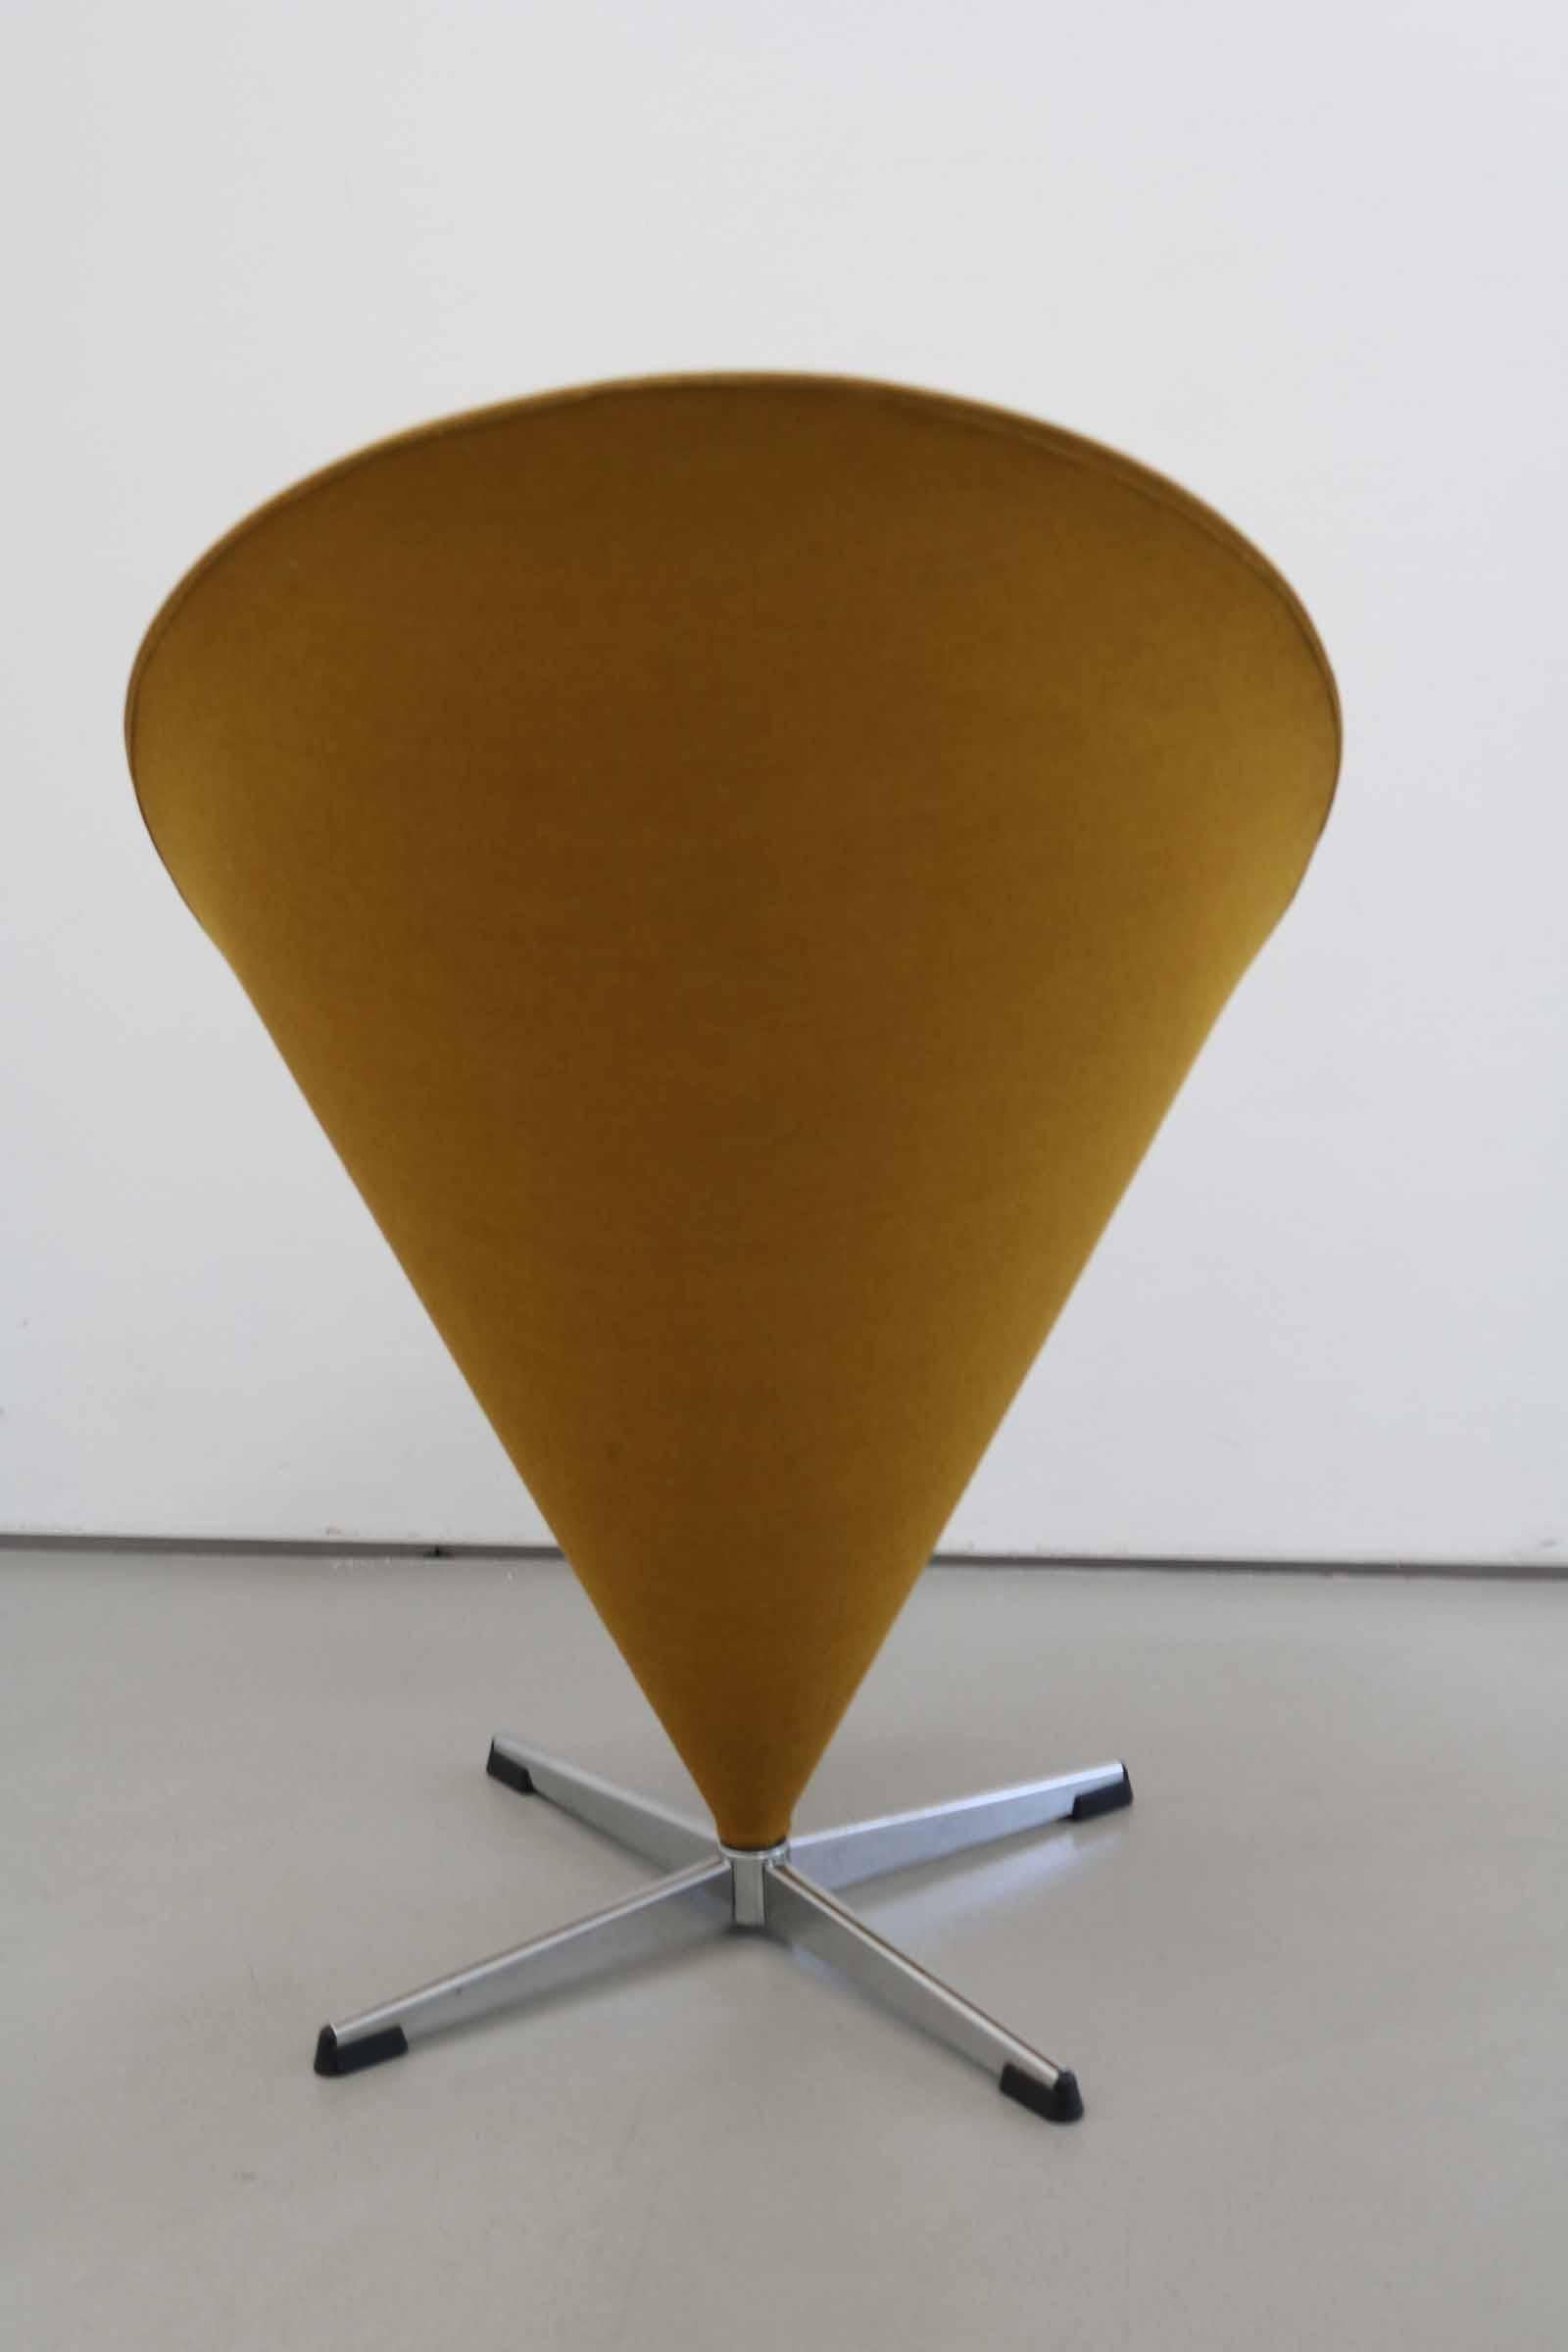 Mid-Century Modern Verner Panton Cone Chair in Original Fabric, Denmark, 1960s For Sale